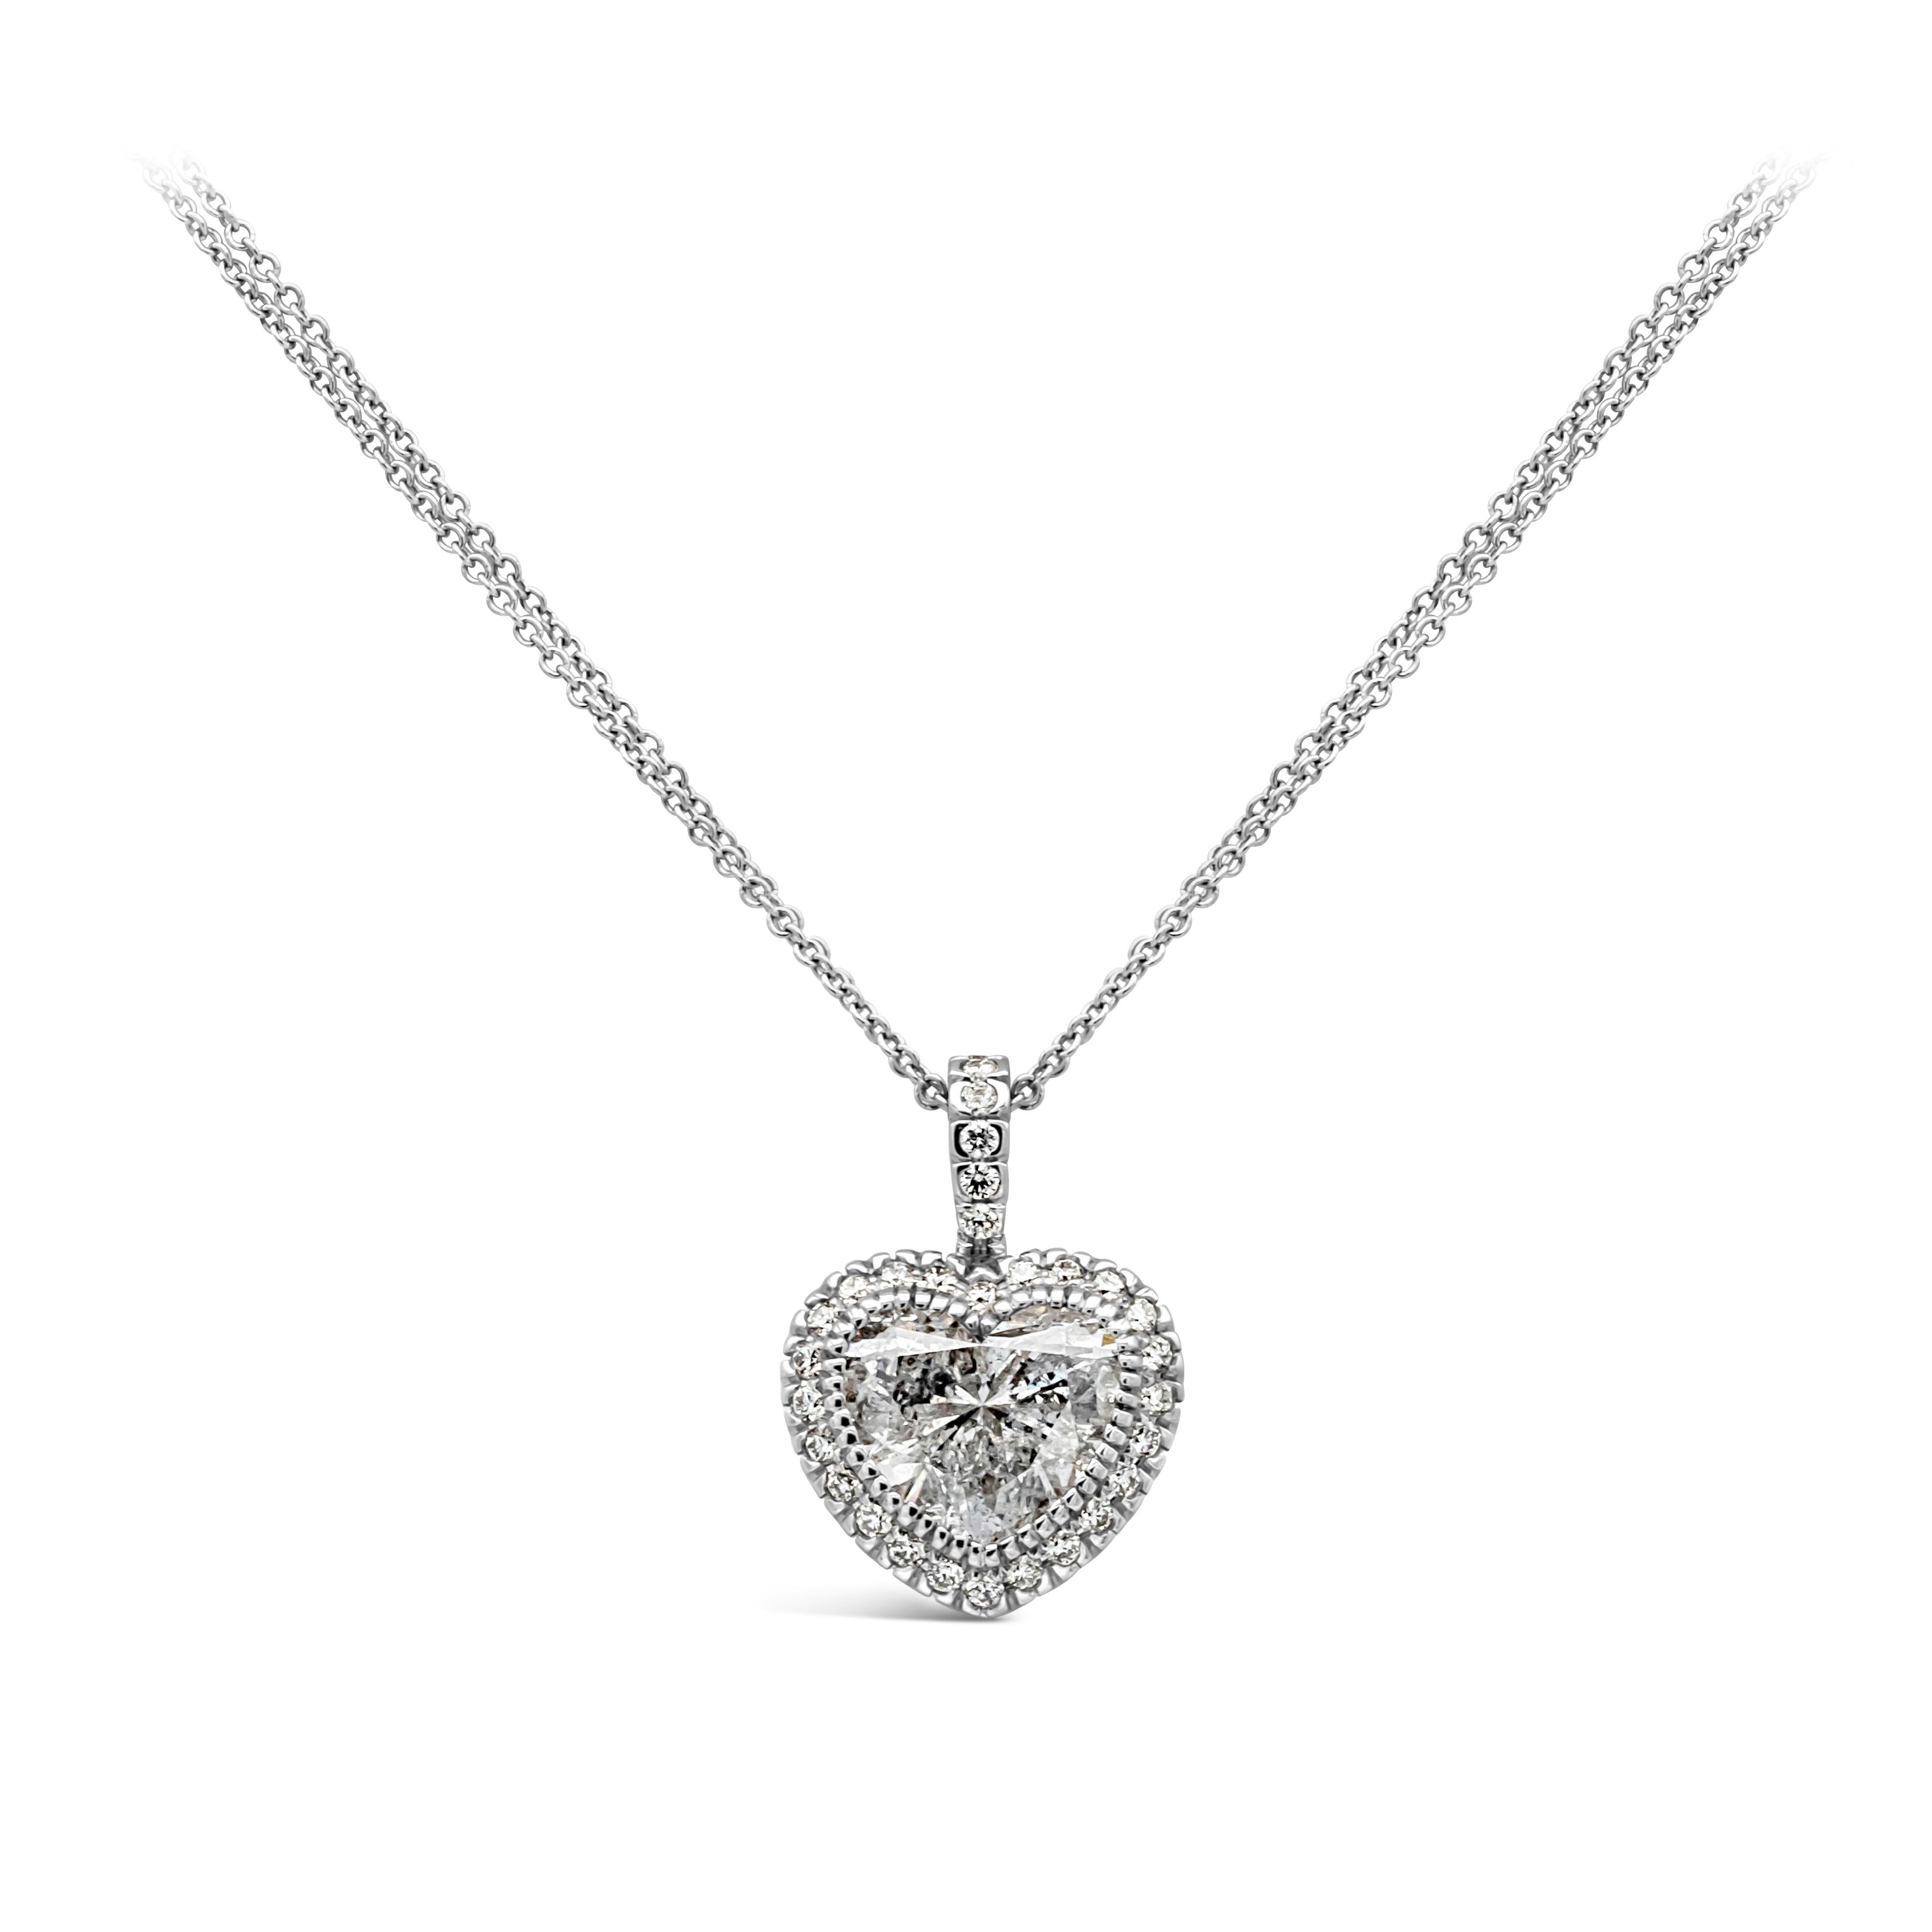 Contemporain Roman Malakov, collier à pendentif halo de diamants en forme de cœur de 3,05 carats en vente